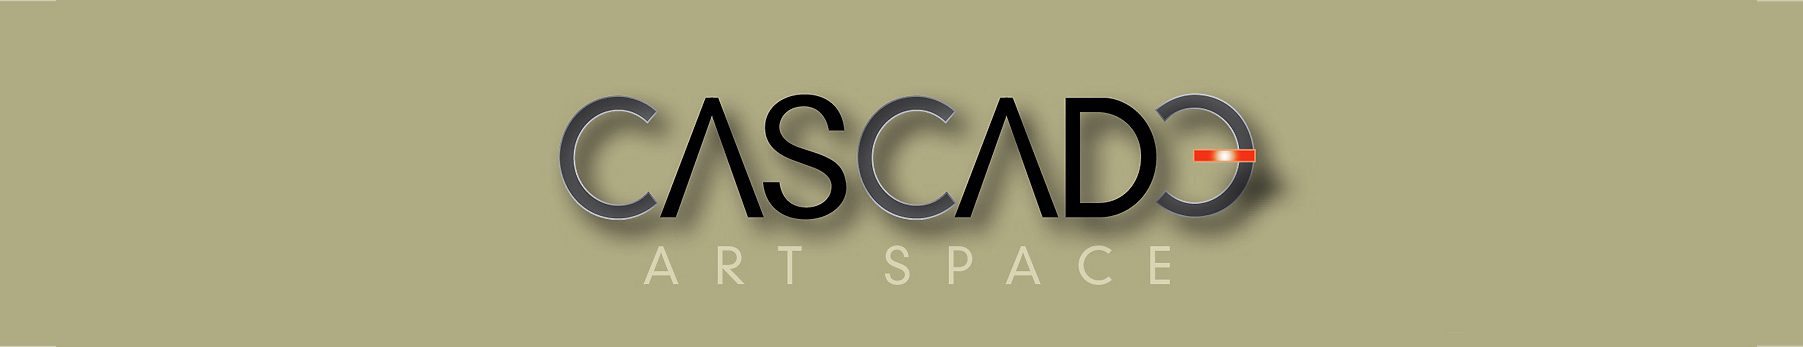 Cascade Gallery